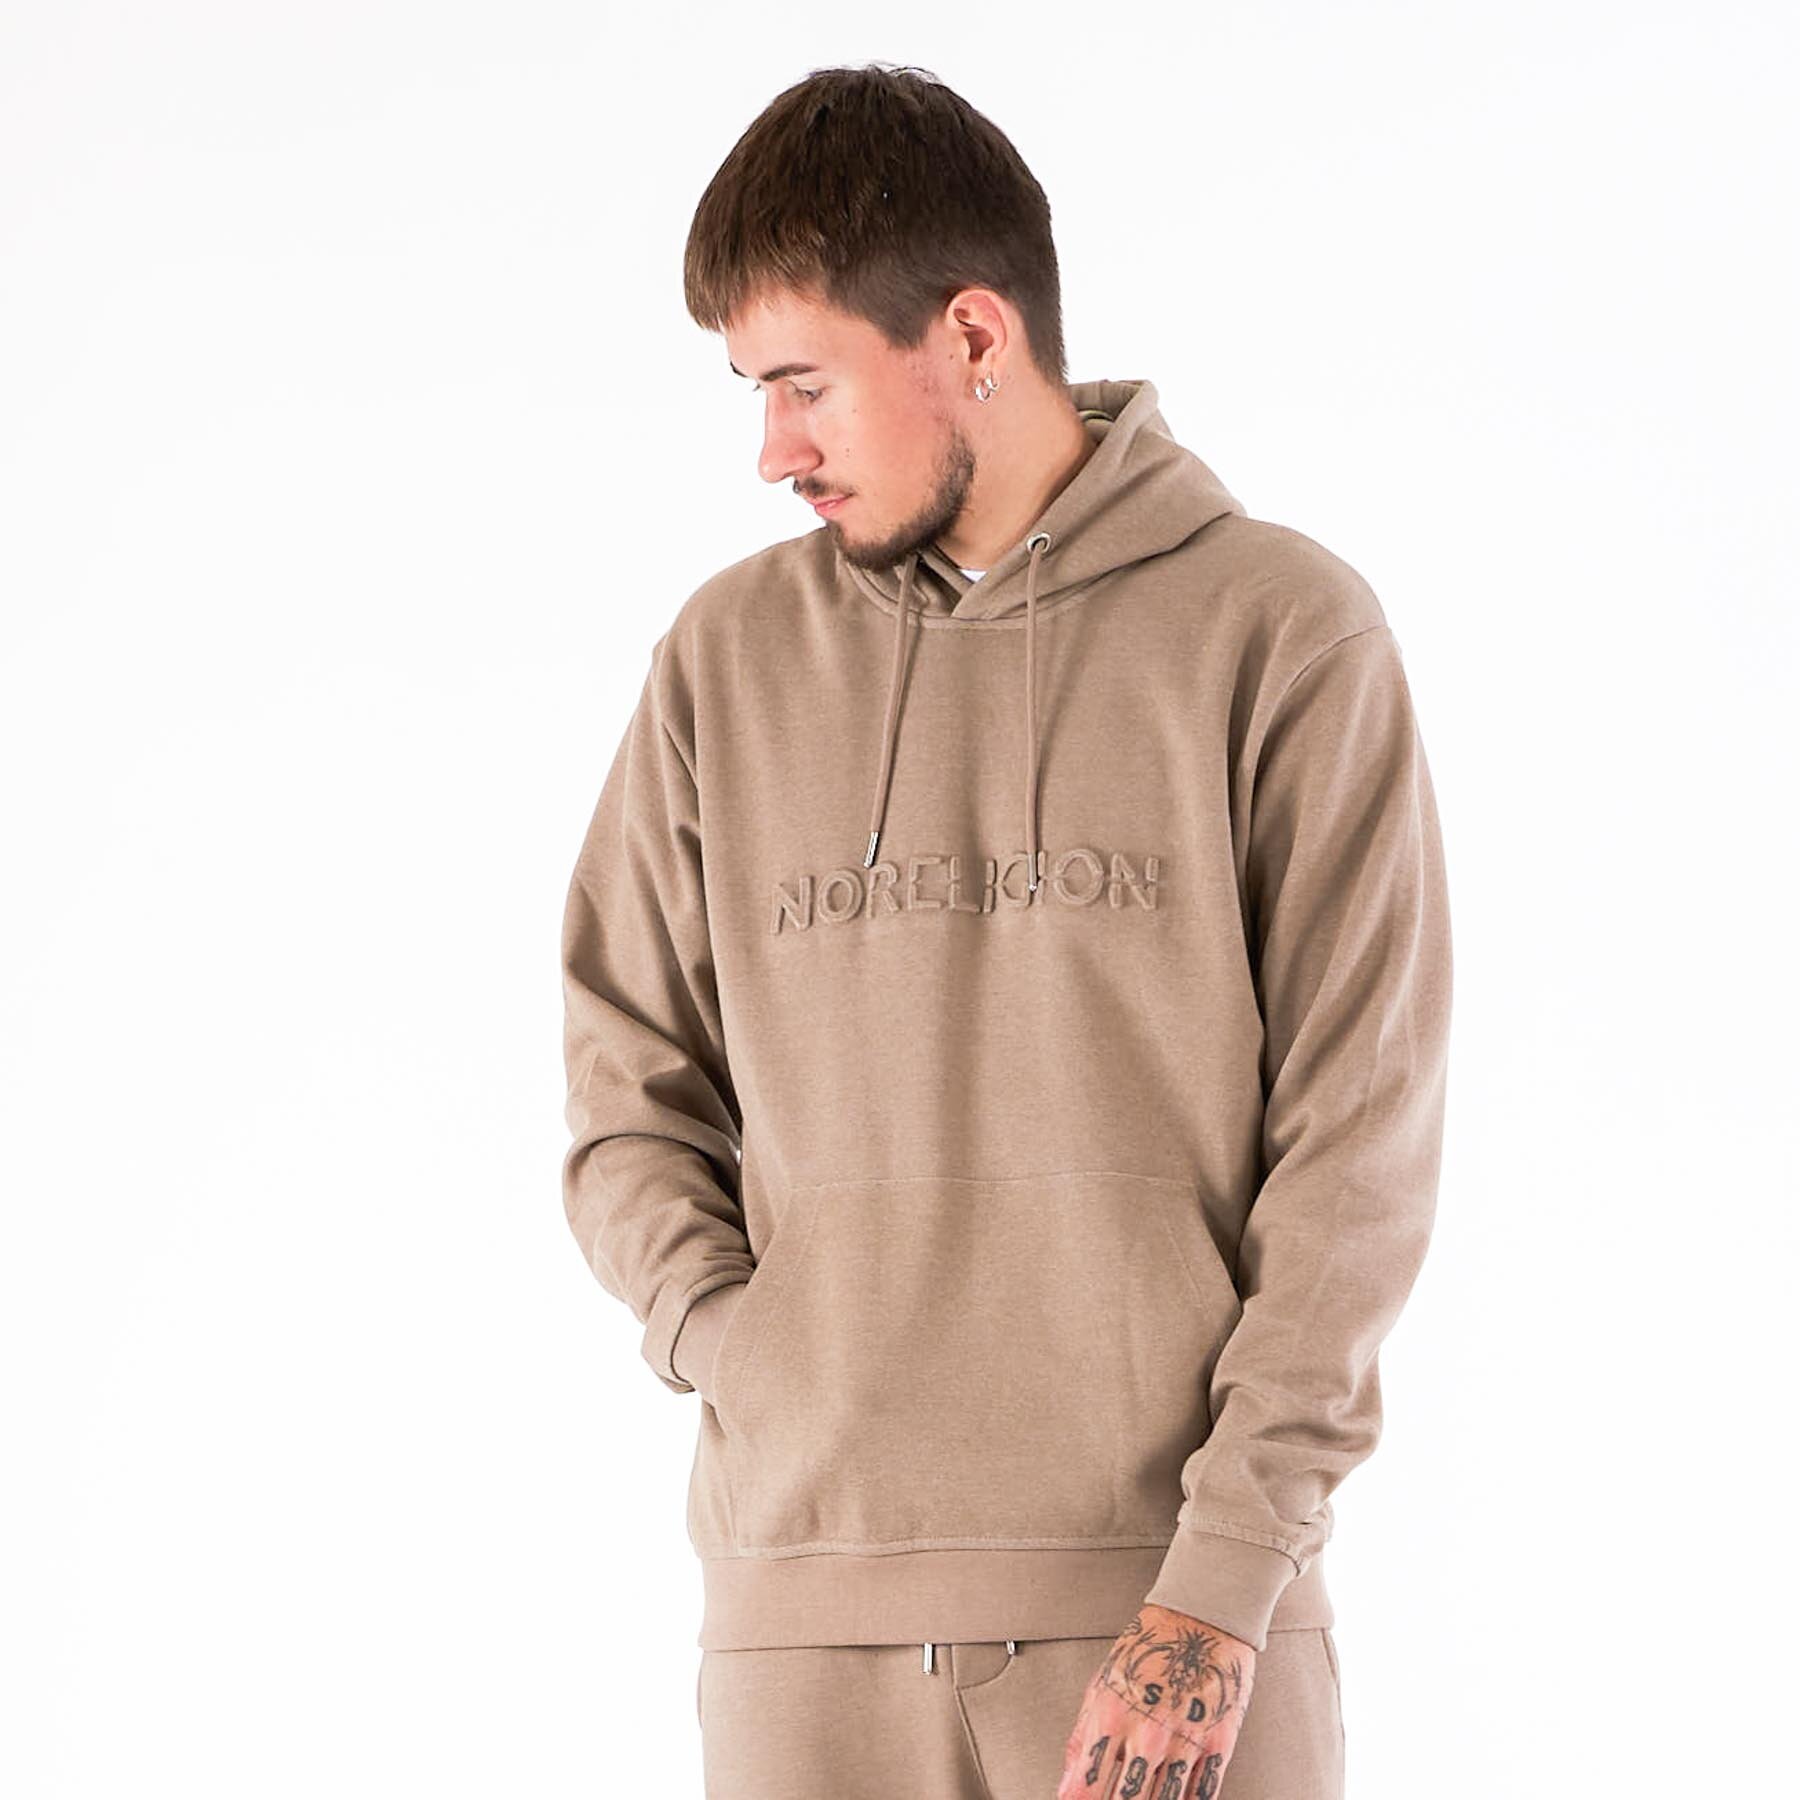 Noreligion - Box tech hoodie - Sweatshirts og trøjer til herre - Beige - XXL